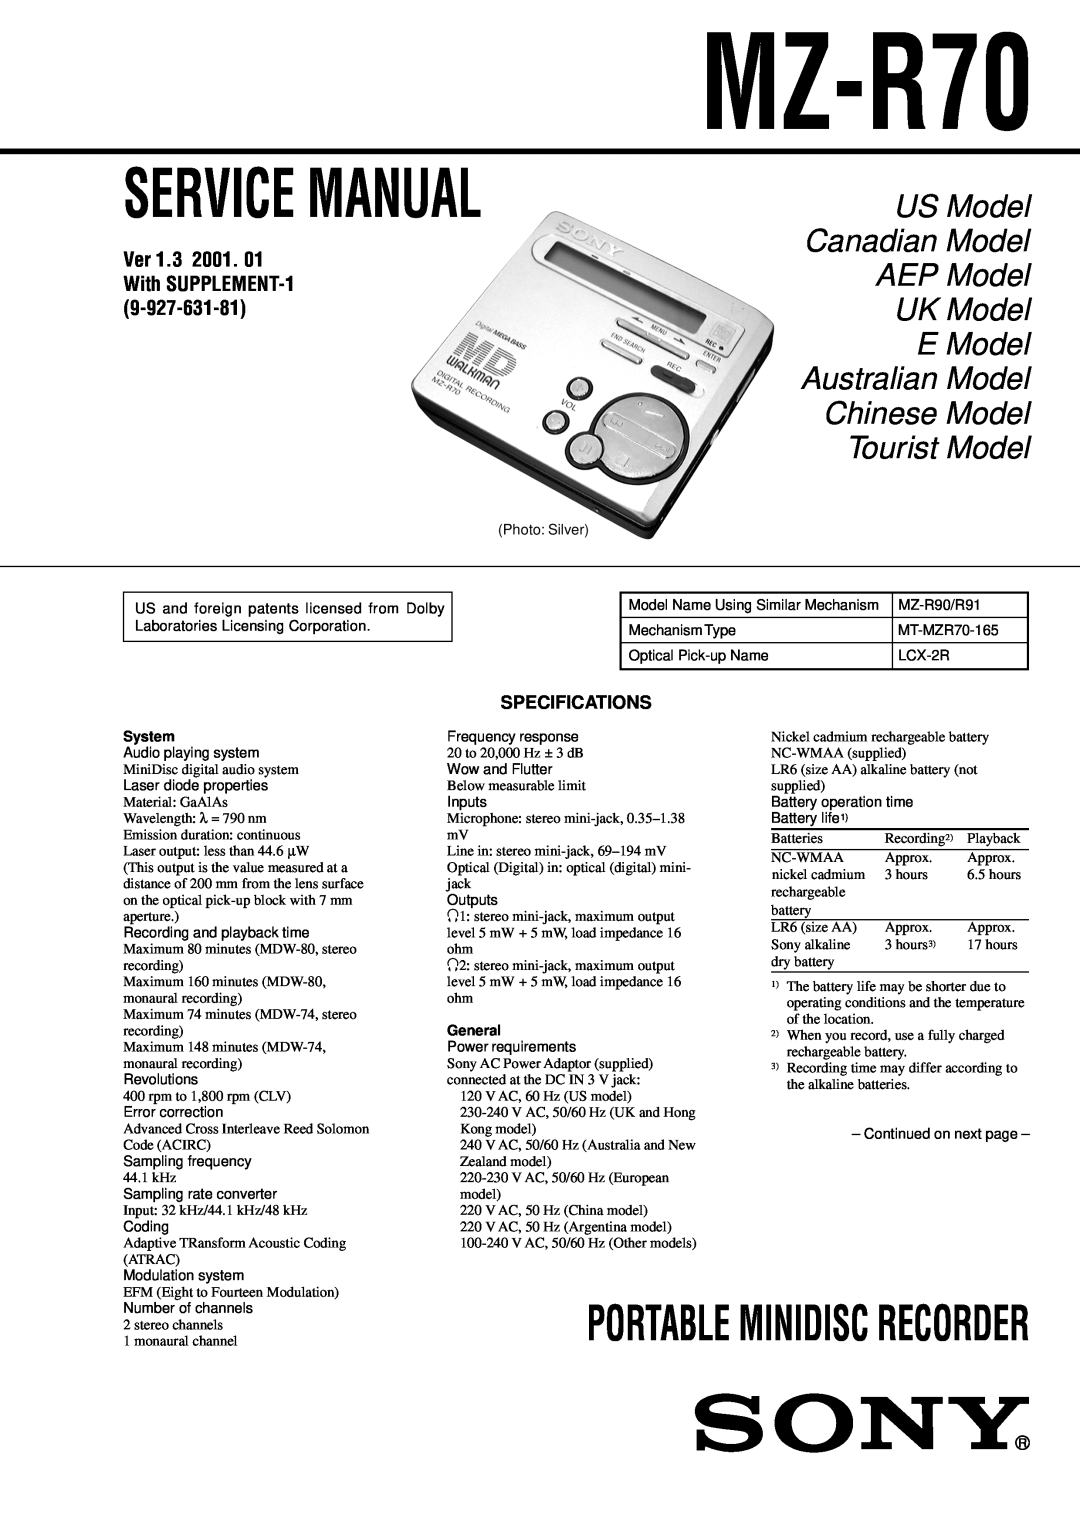 Sony MT-MZR70-165 service manual US Model, Canadian Model, AEP Model, UK Model, E Model, Australian Model, Chinese Model 